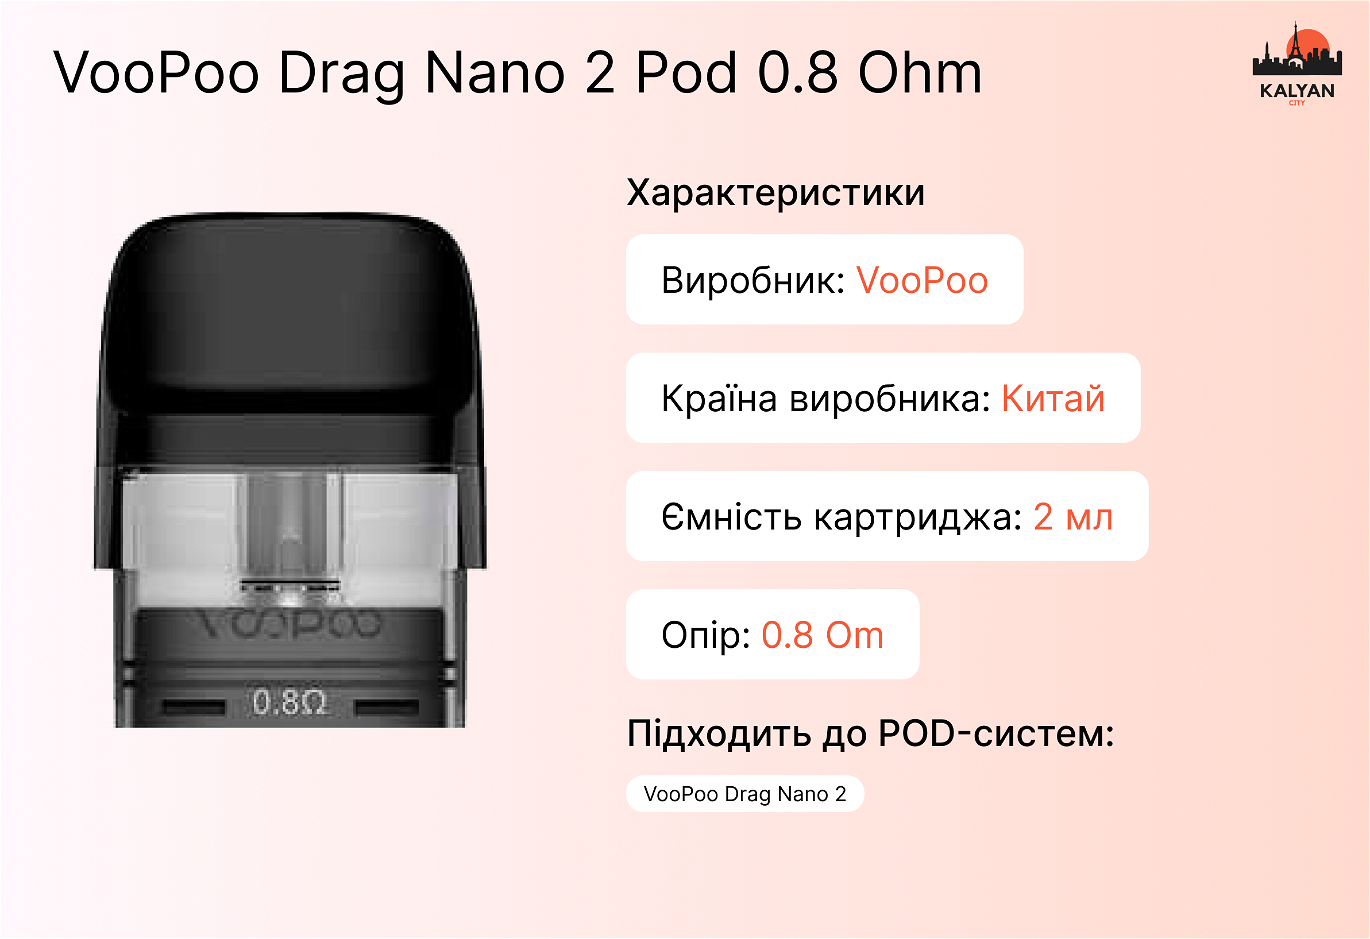 VooPoo Drag Nano 2 Pod 0.8 Ohm Характеристика